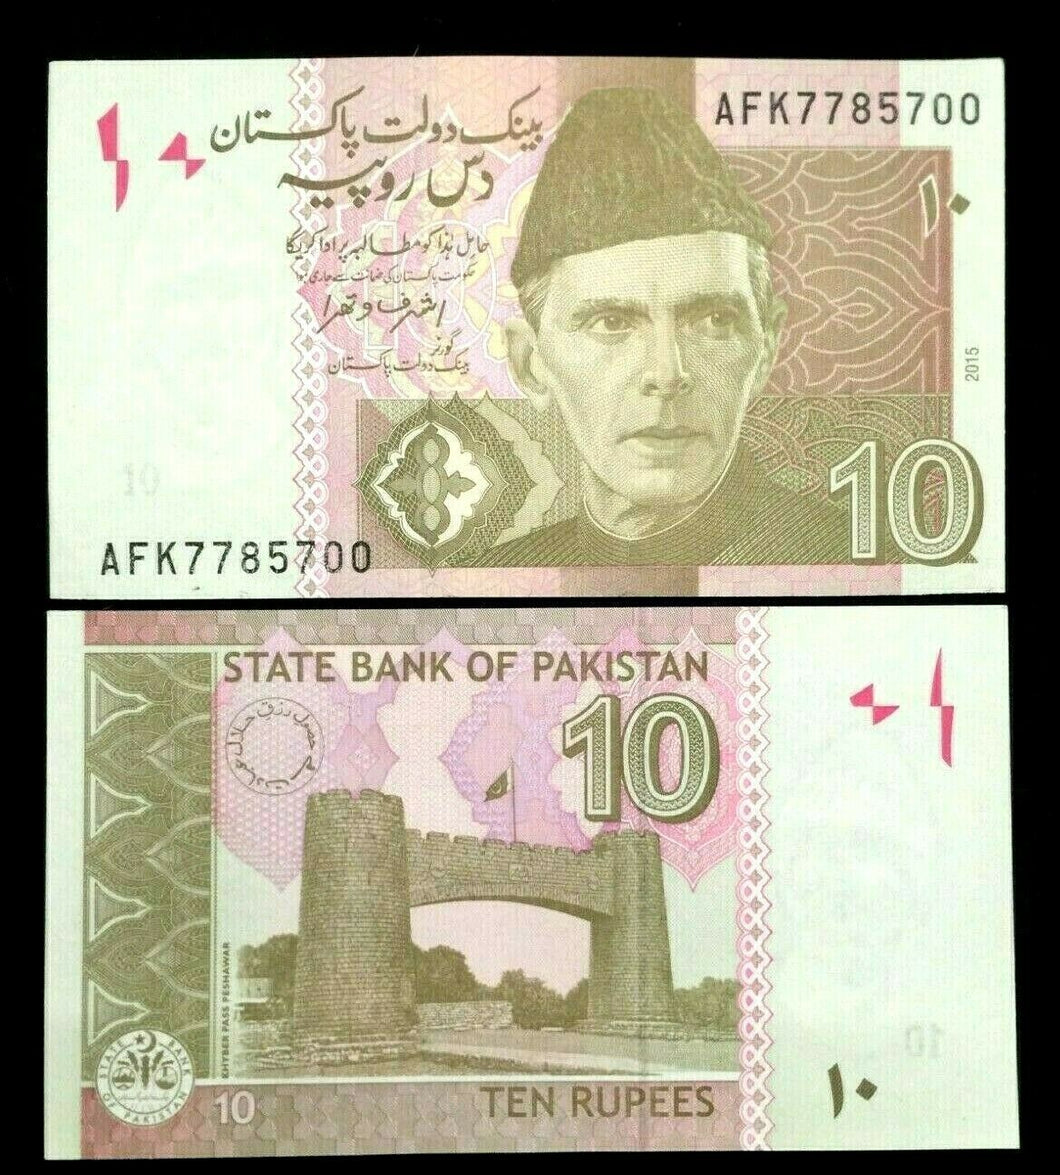 Pakistan 10 Rupees Banknote New Unused in Crisp Condition - Collectors Bill